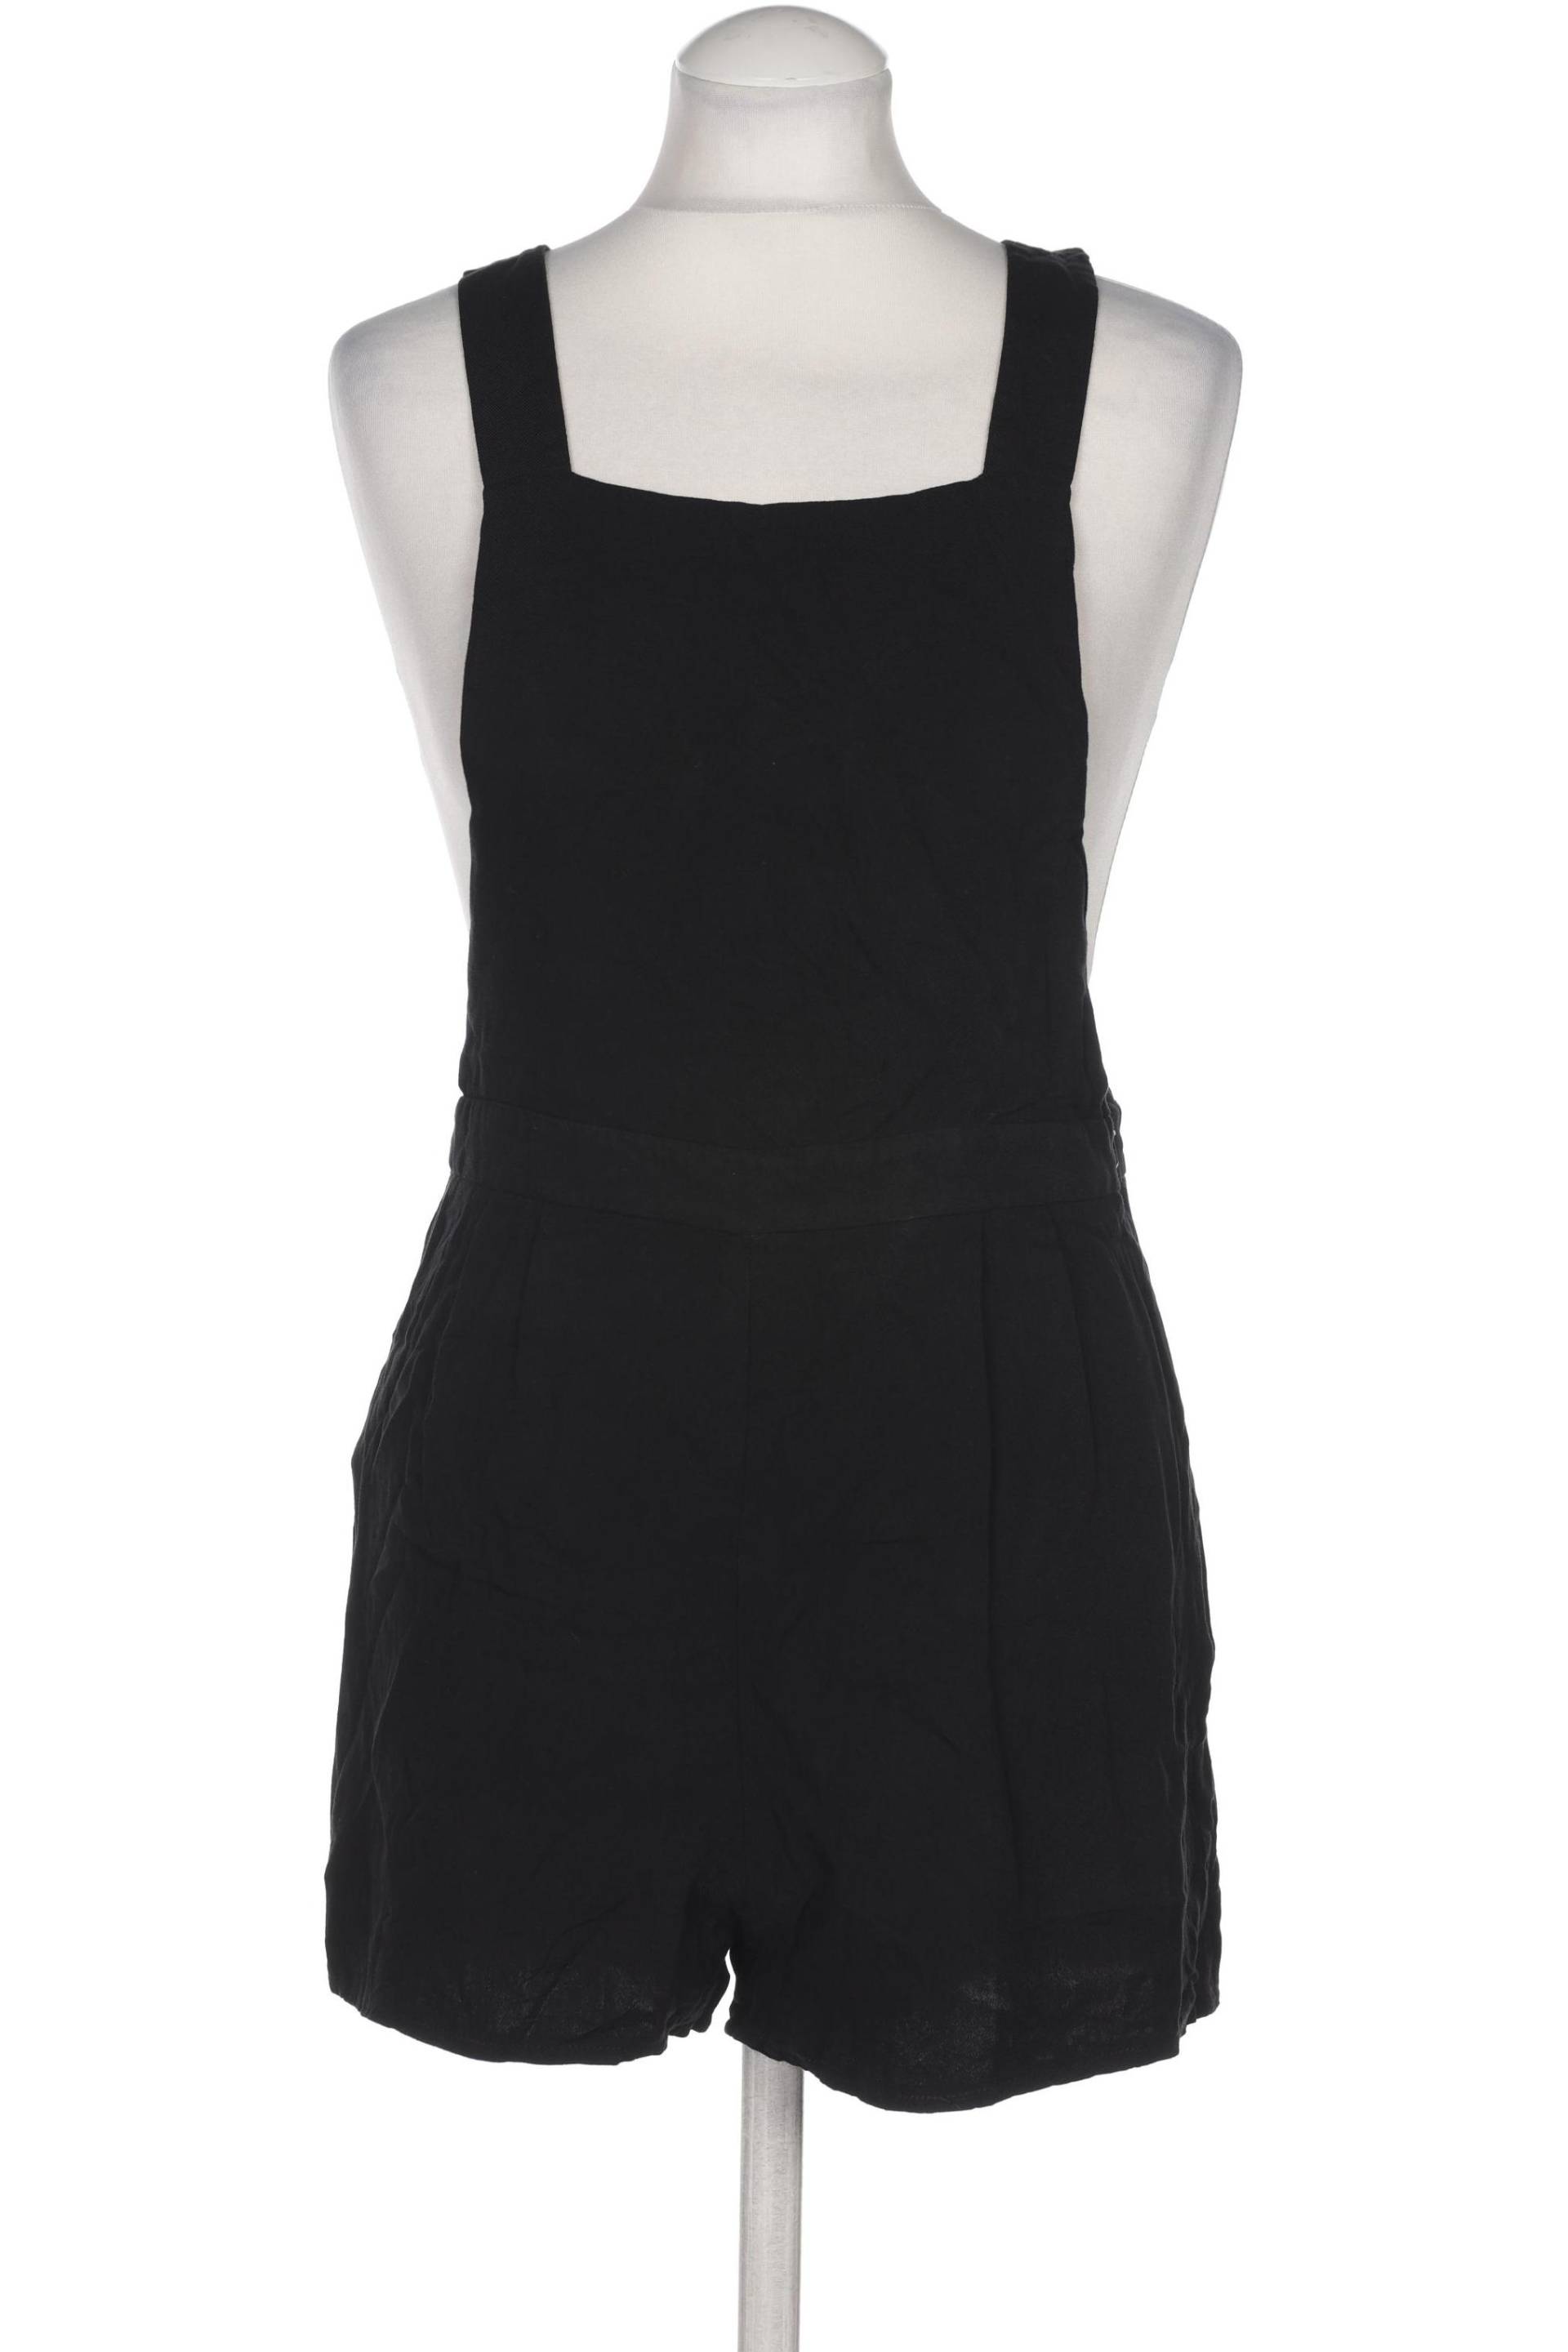 New Look Damen Jumpsuit/Overall, schwarz, Gr. 38 von New Look